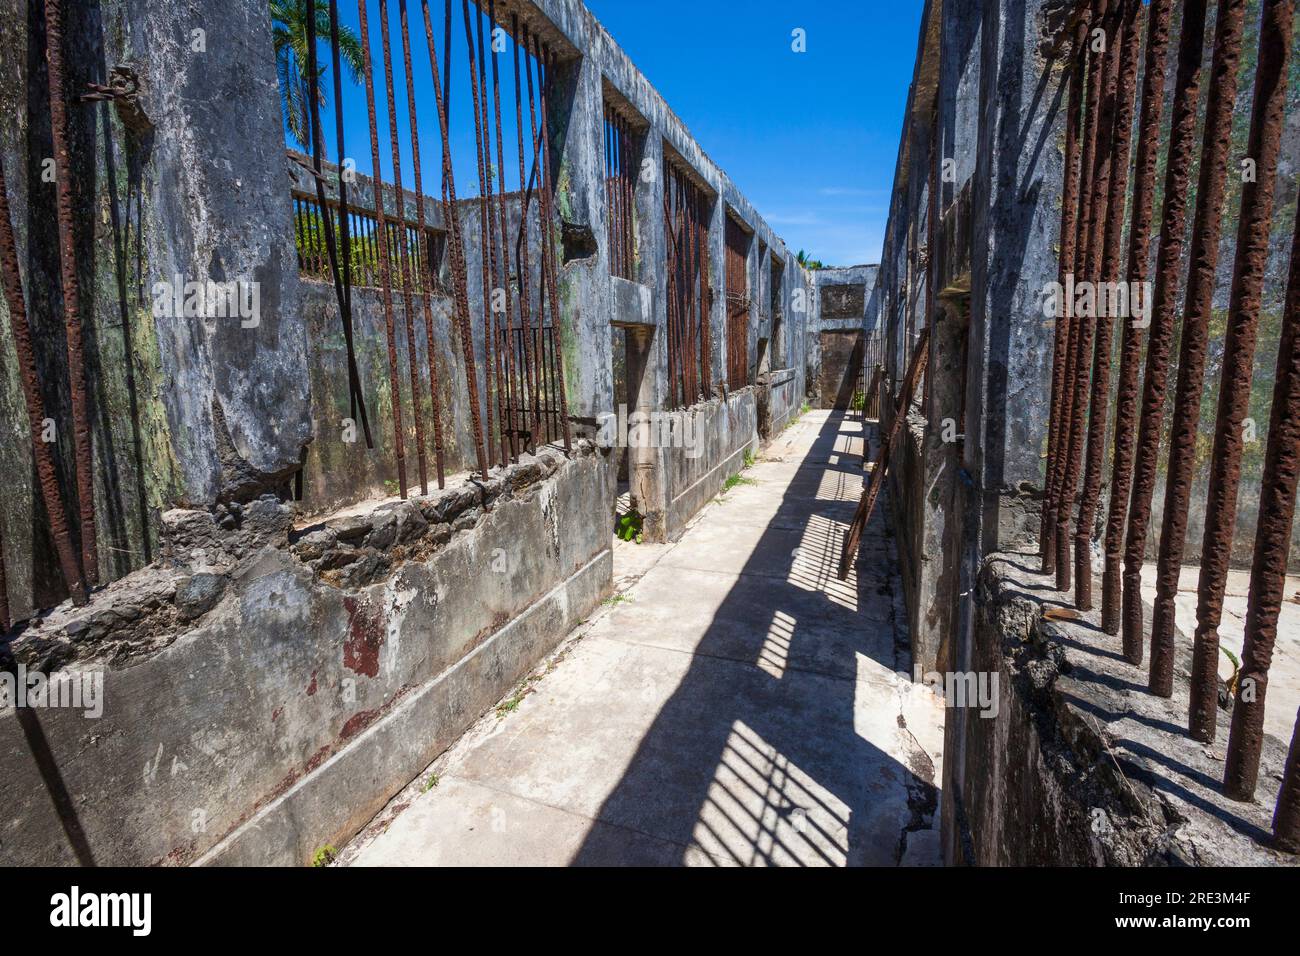 Inside the old prison at Isla de Coiba, Pacific coast, Veraguas Province, Republic of Panama, Central America. Stock Photo